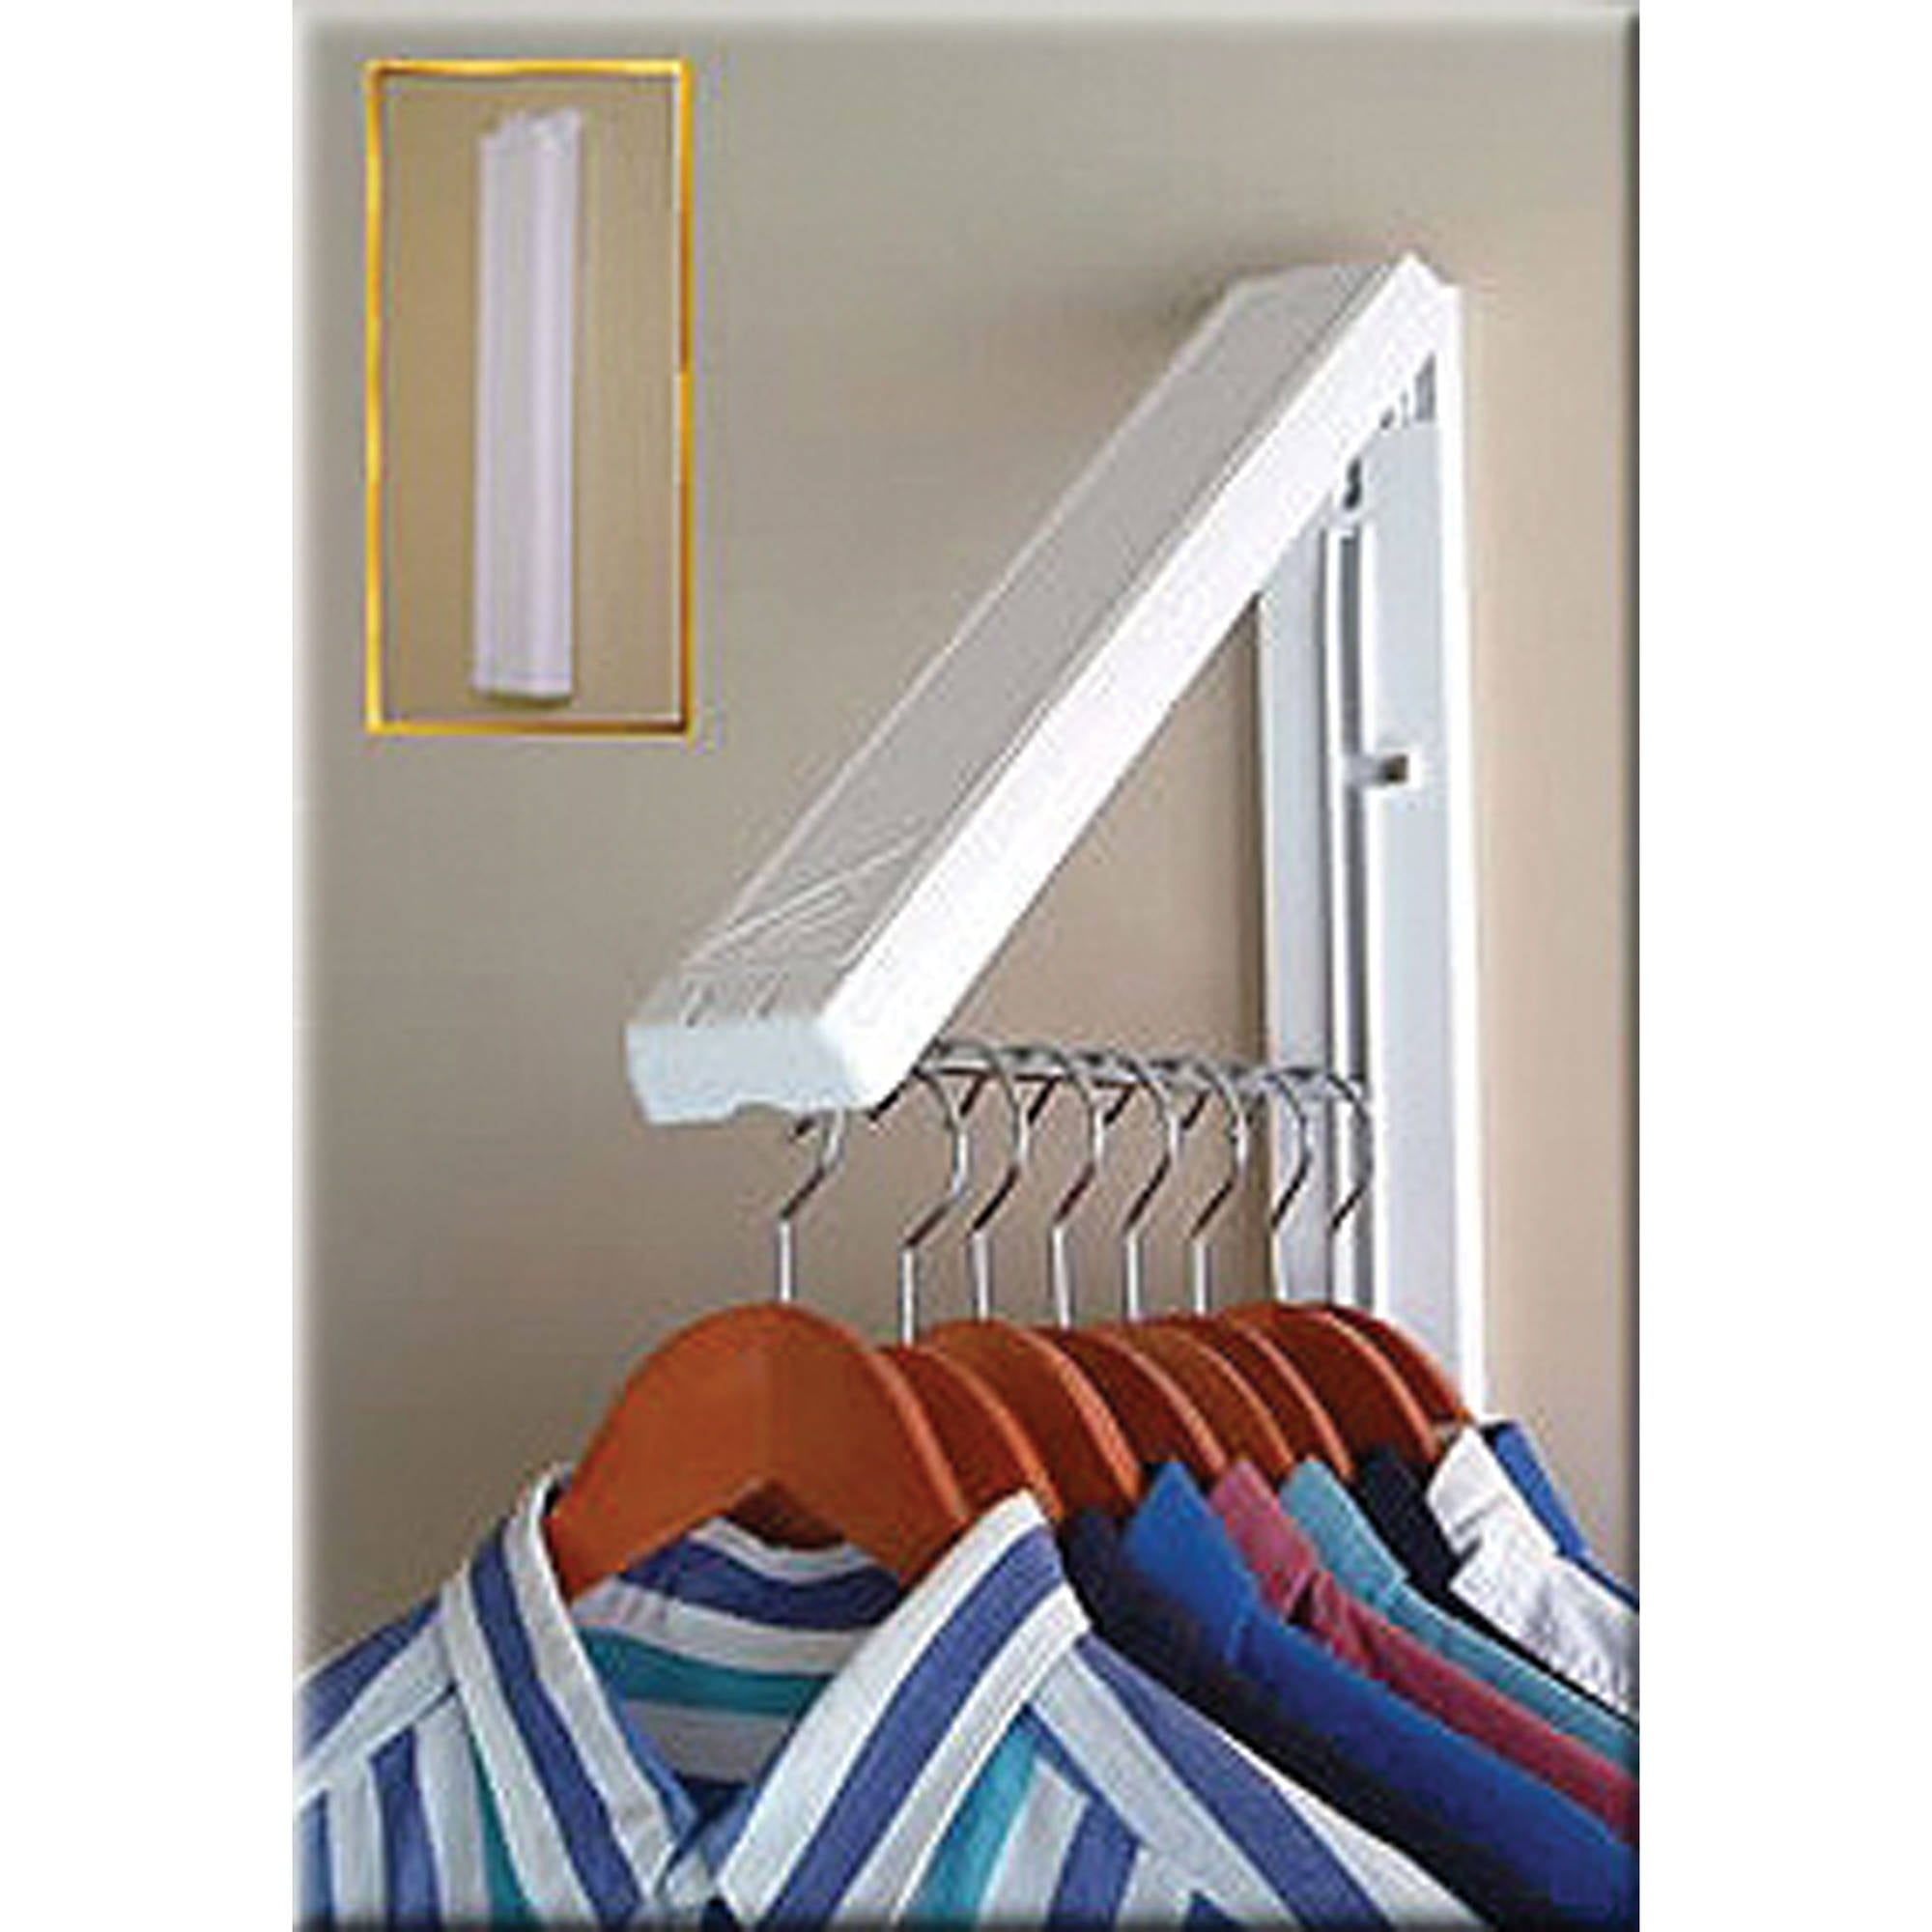 Creative Clothes Hanger 5 Layers Organizer Closet Holder Laundry Saver Space @@ 